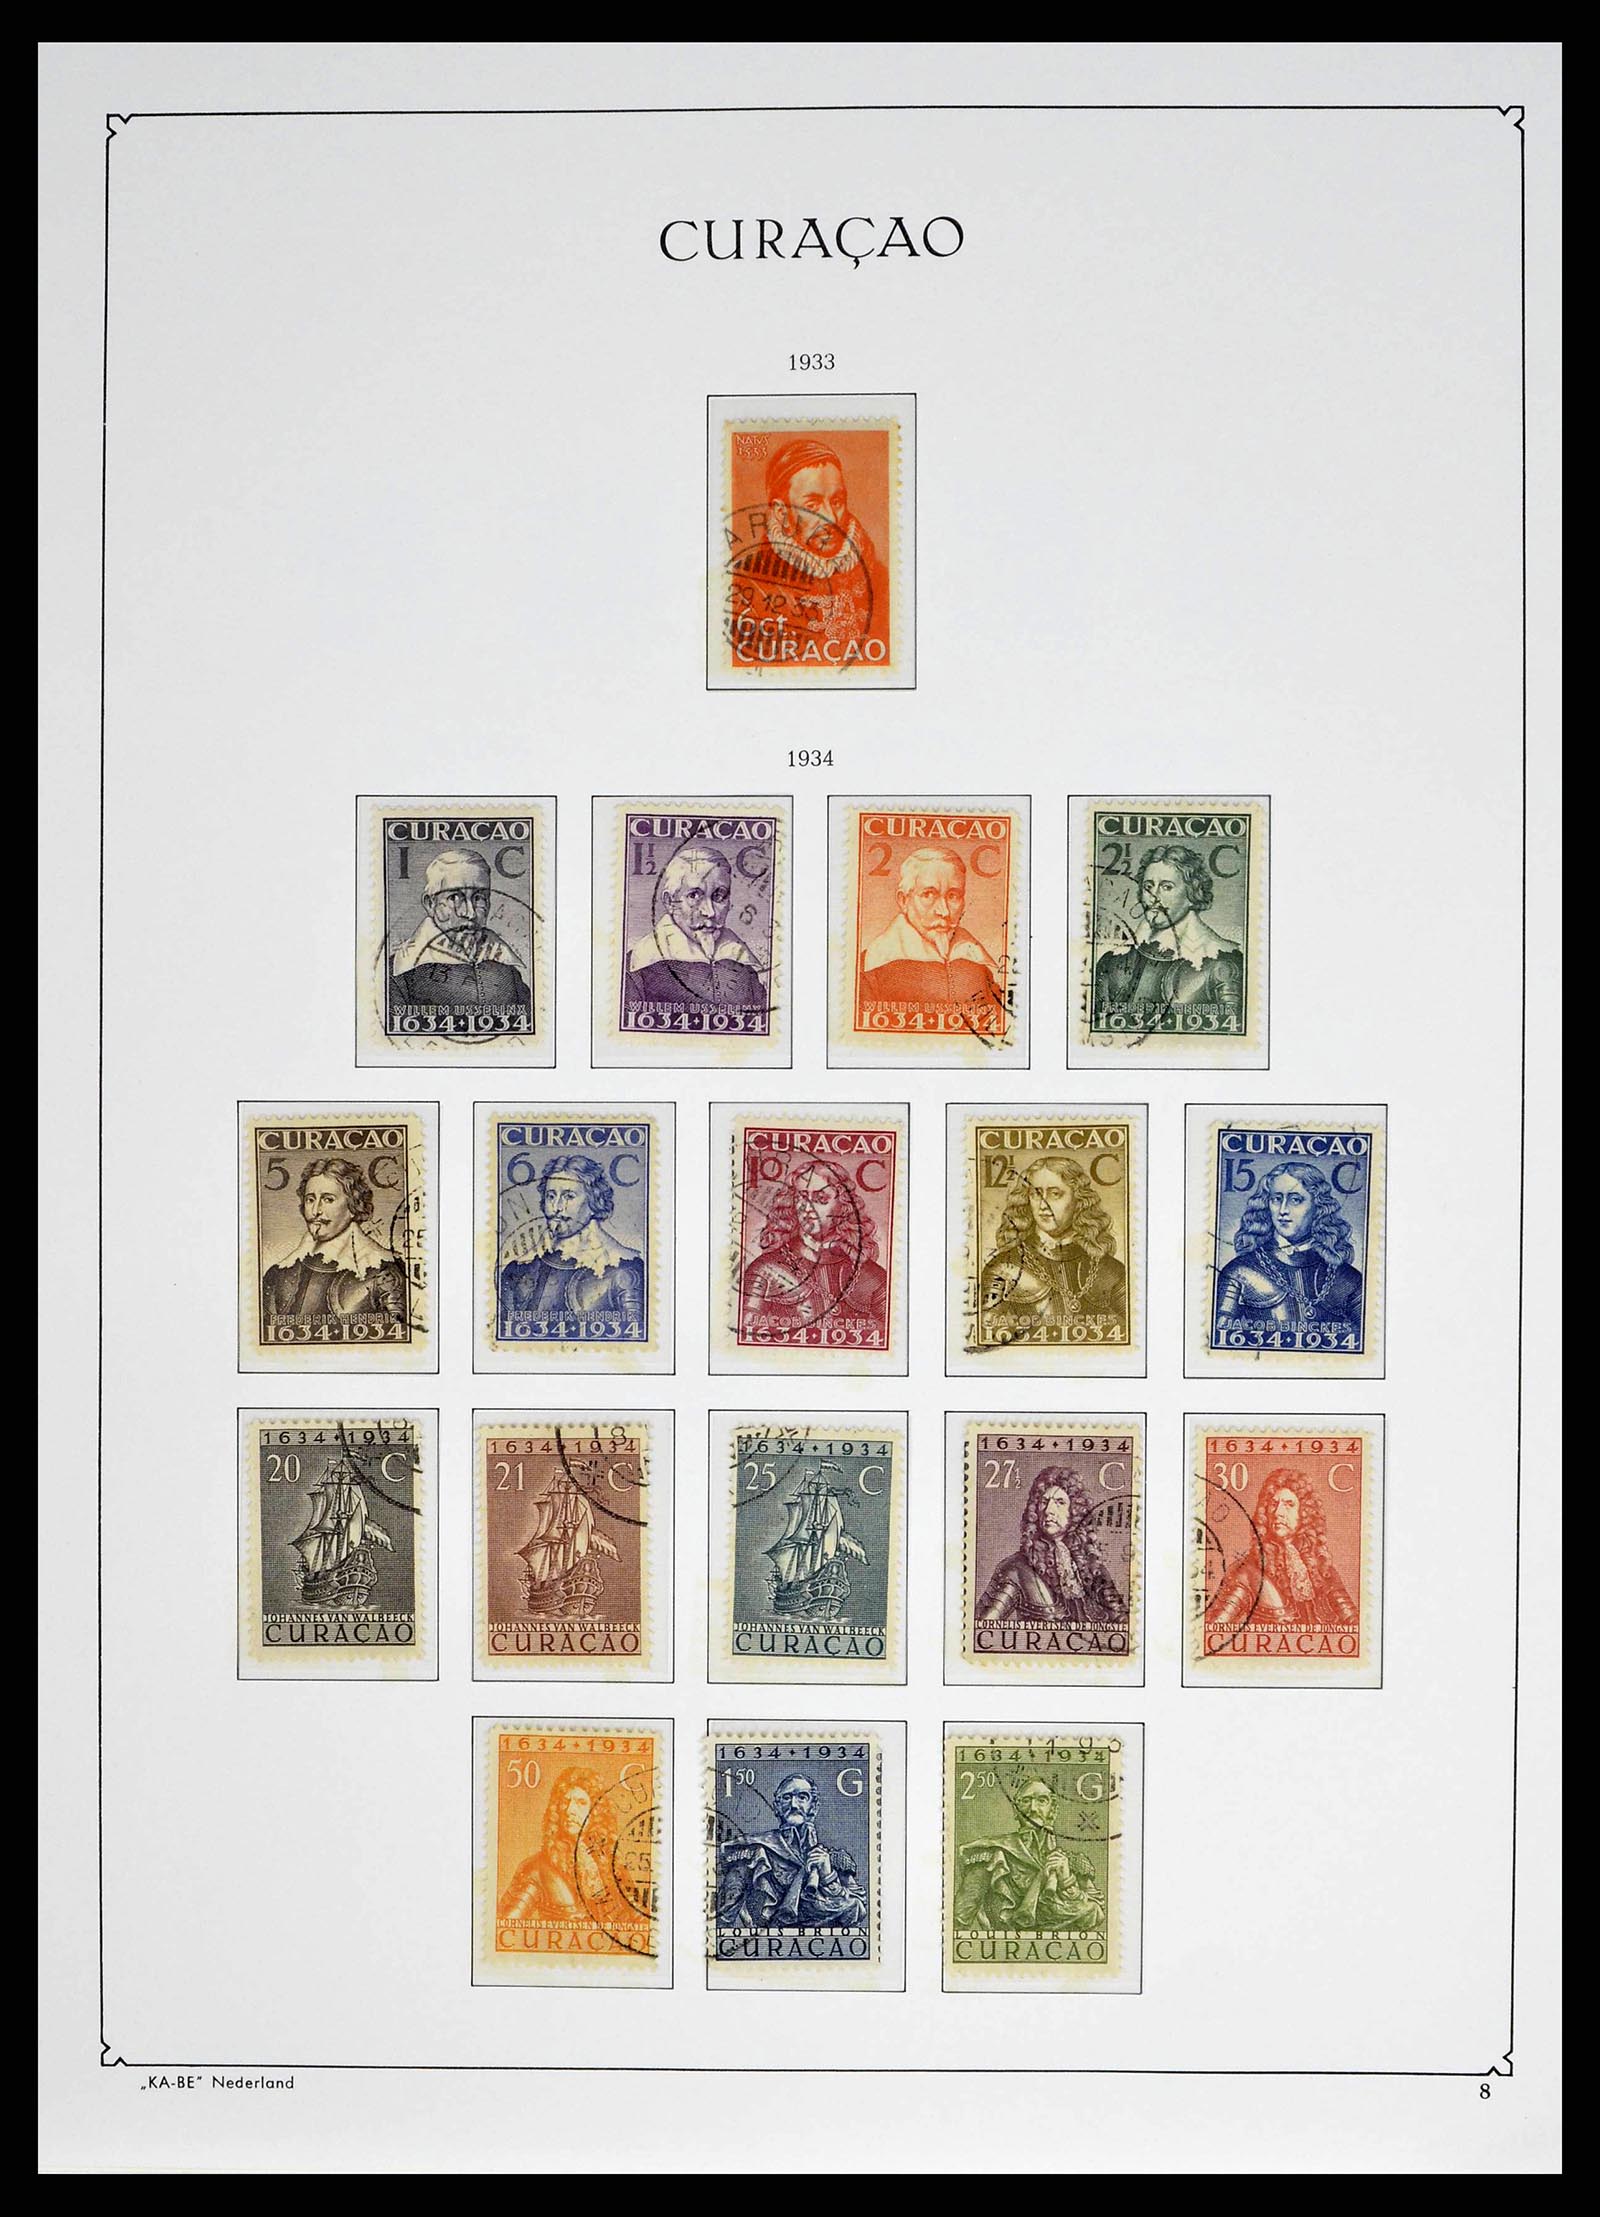 38471 0008 - Stamp collection 38471 Curaçao/Antilles 1873-1980.